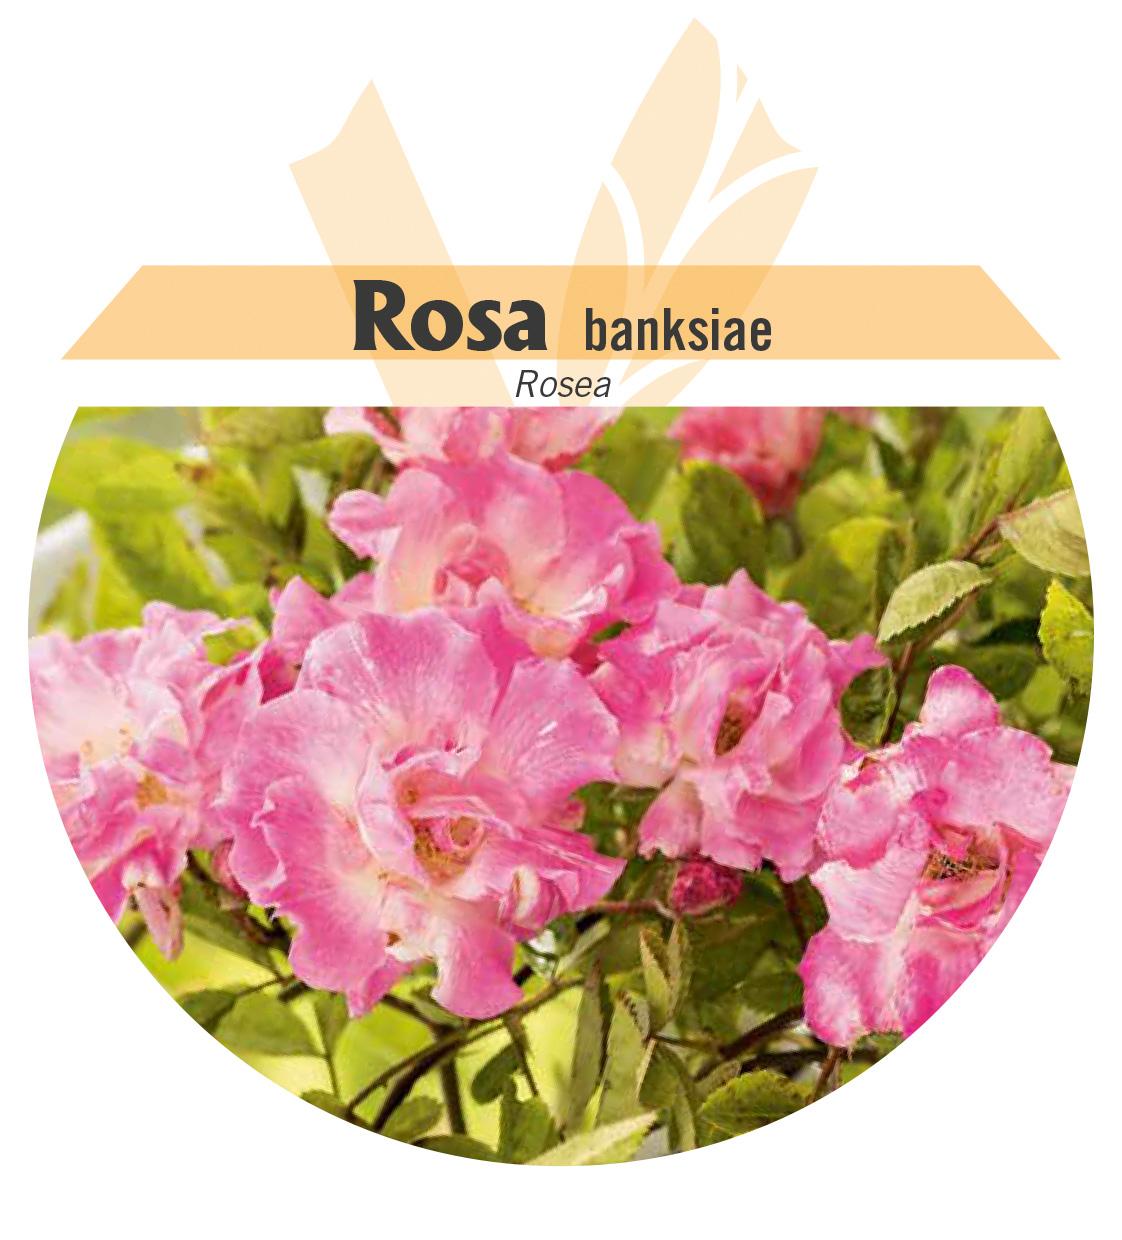 Rosa banksiae